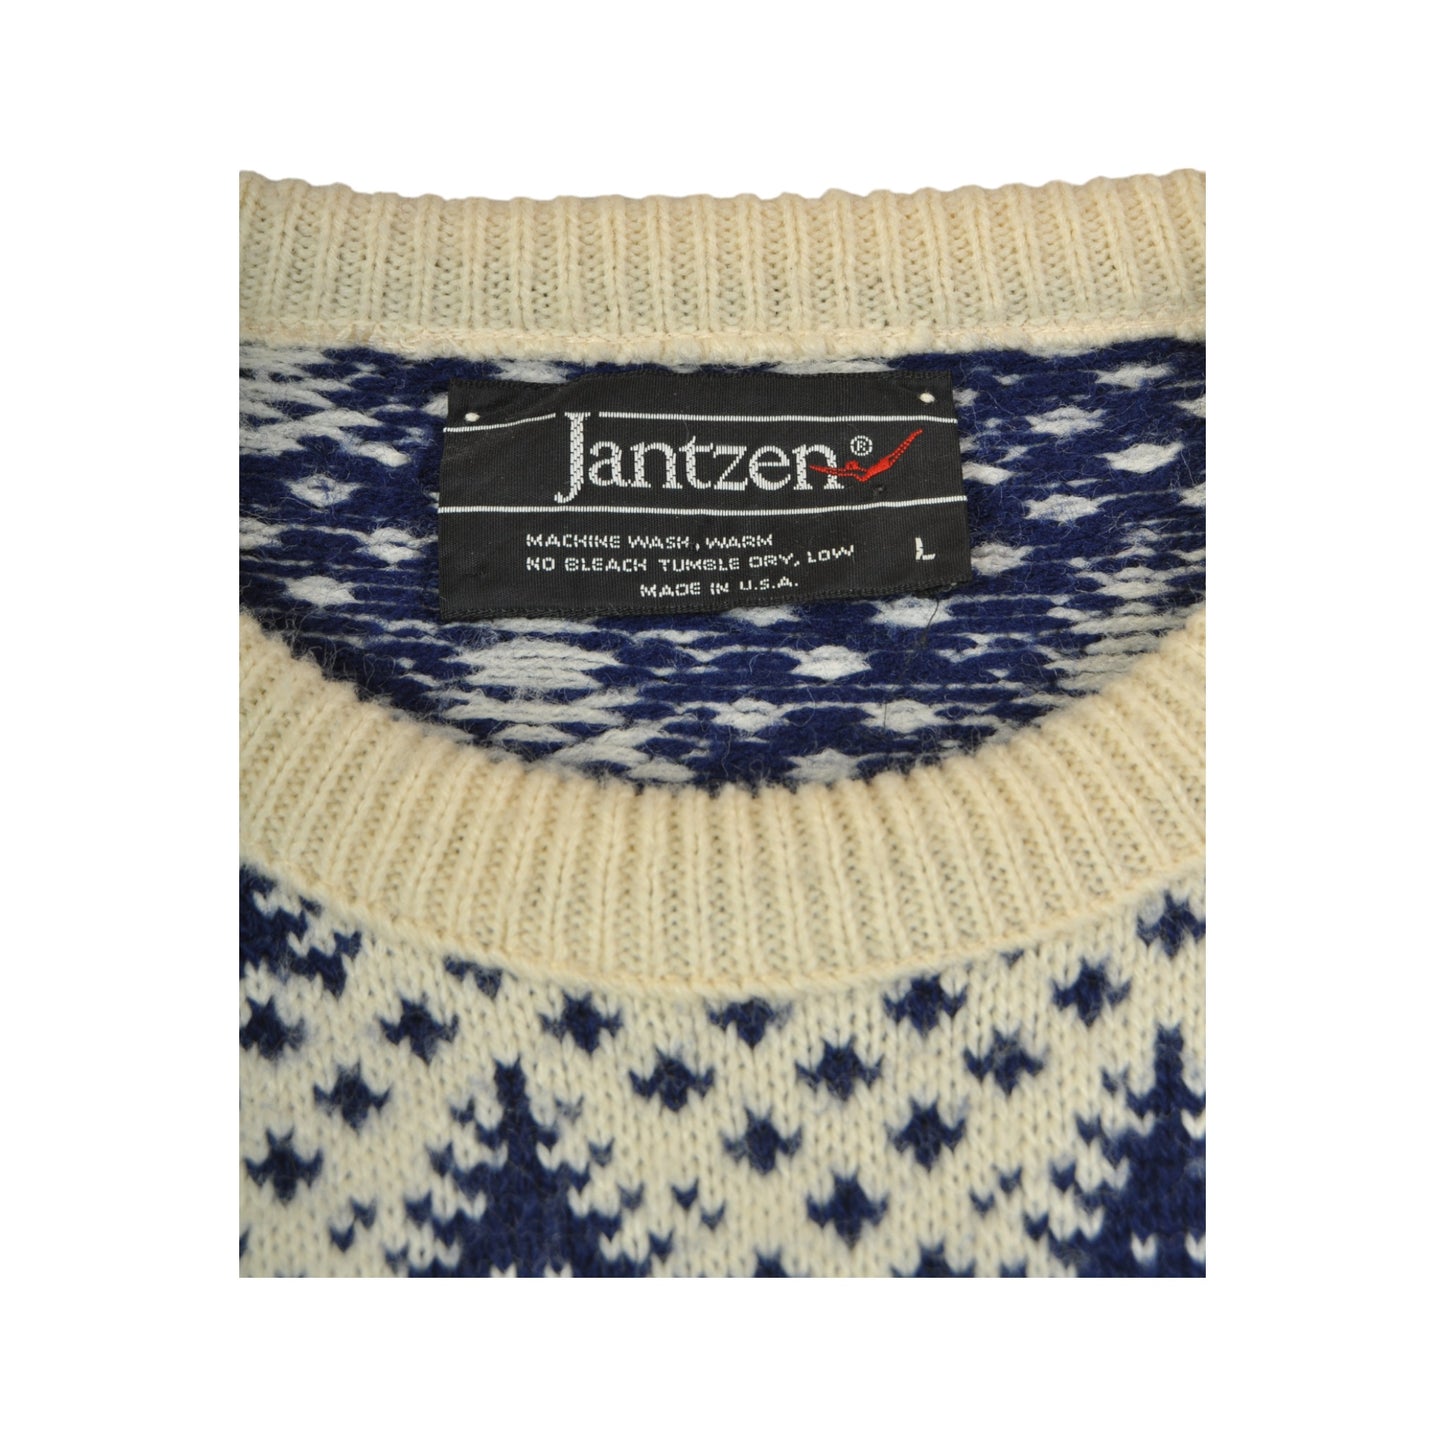 Vintage Knitted Jumper Retro Stag Pattern Cream/Navy Ladies Large